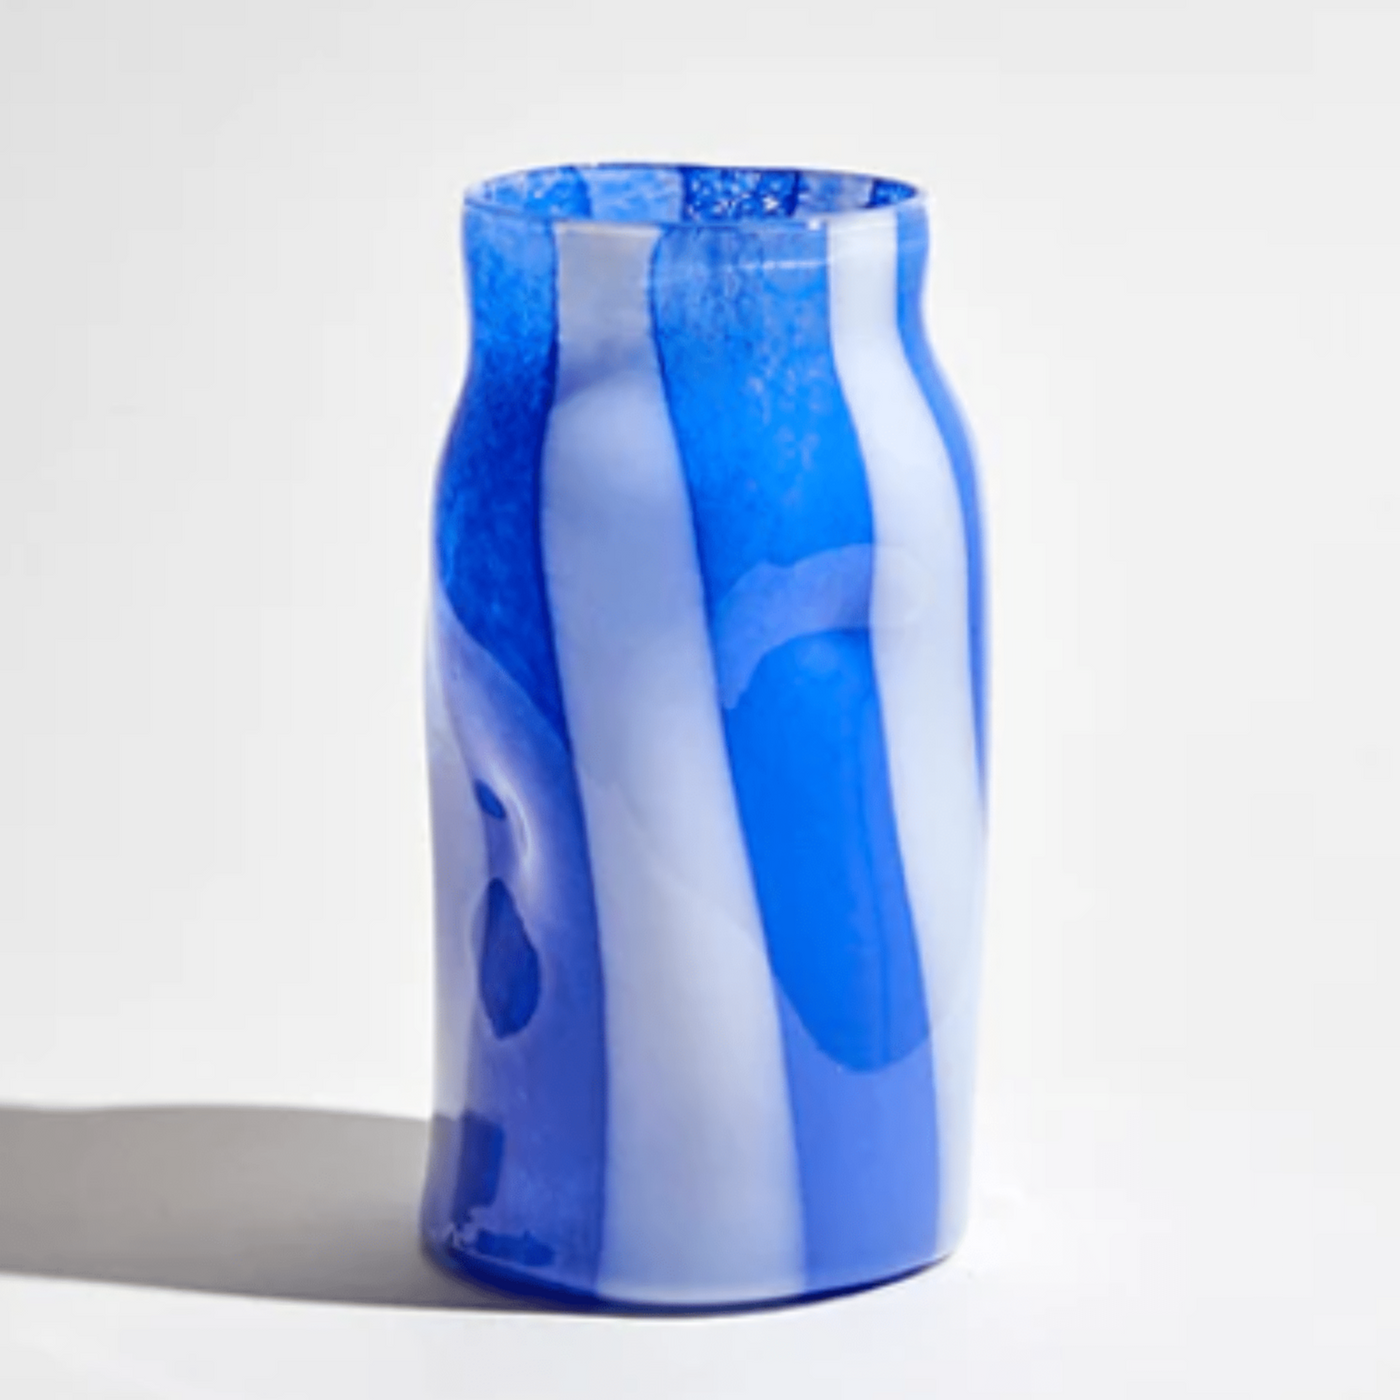 Ben David Candy Cylinder Vase in Cobalt/White